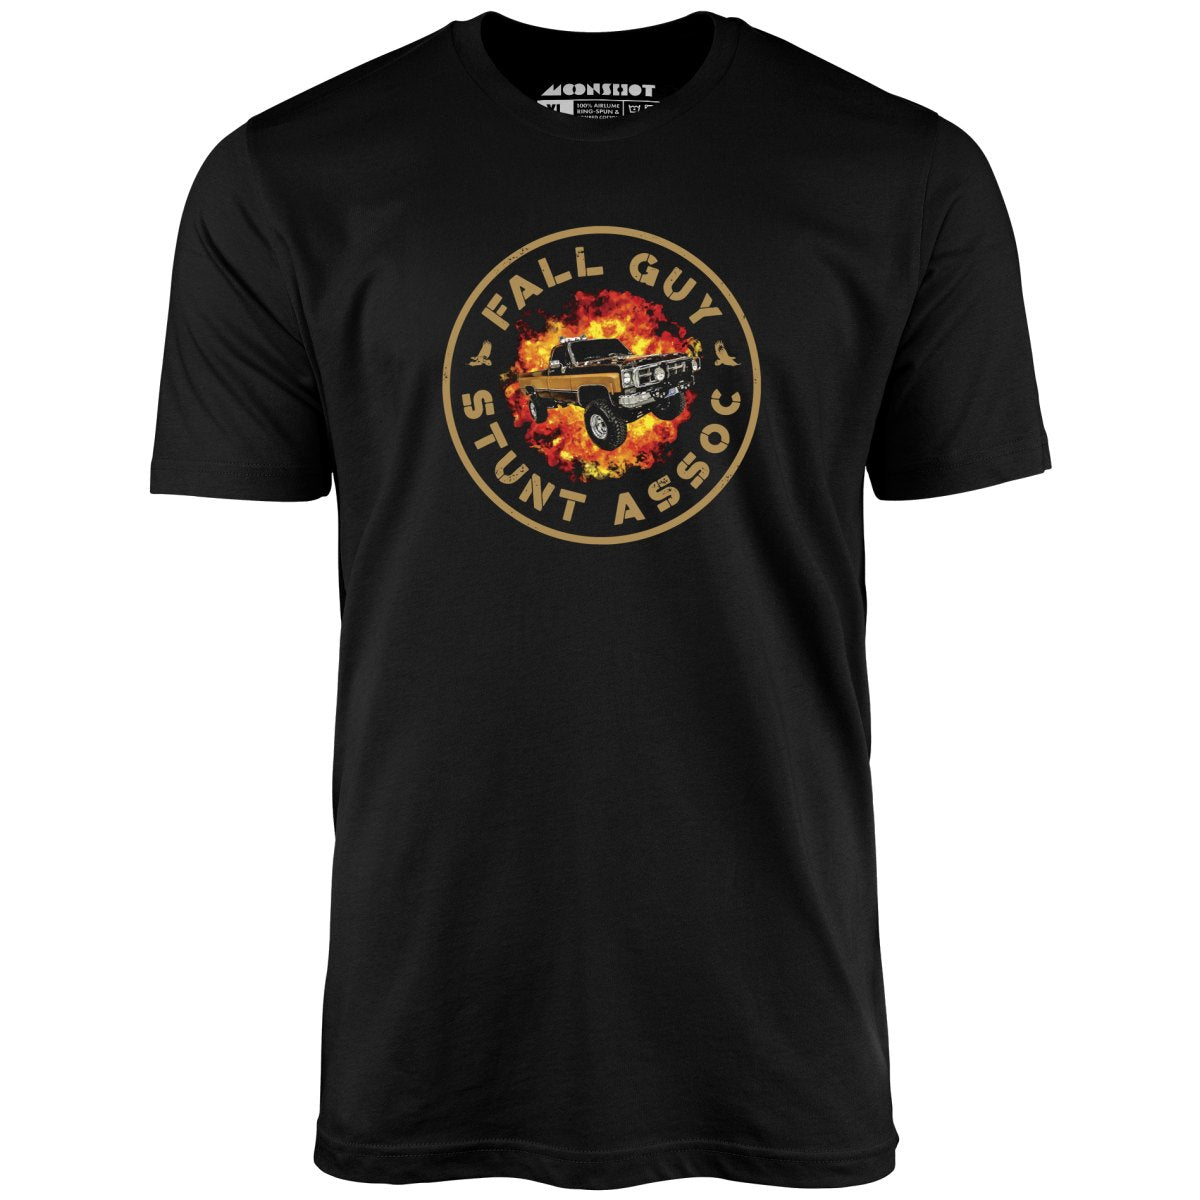 Fall Guy Stunt Association - unisex T-Shirt Black / M